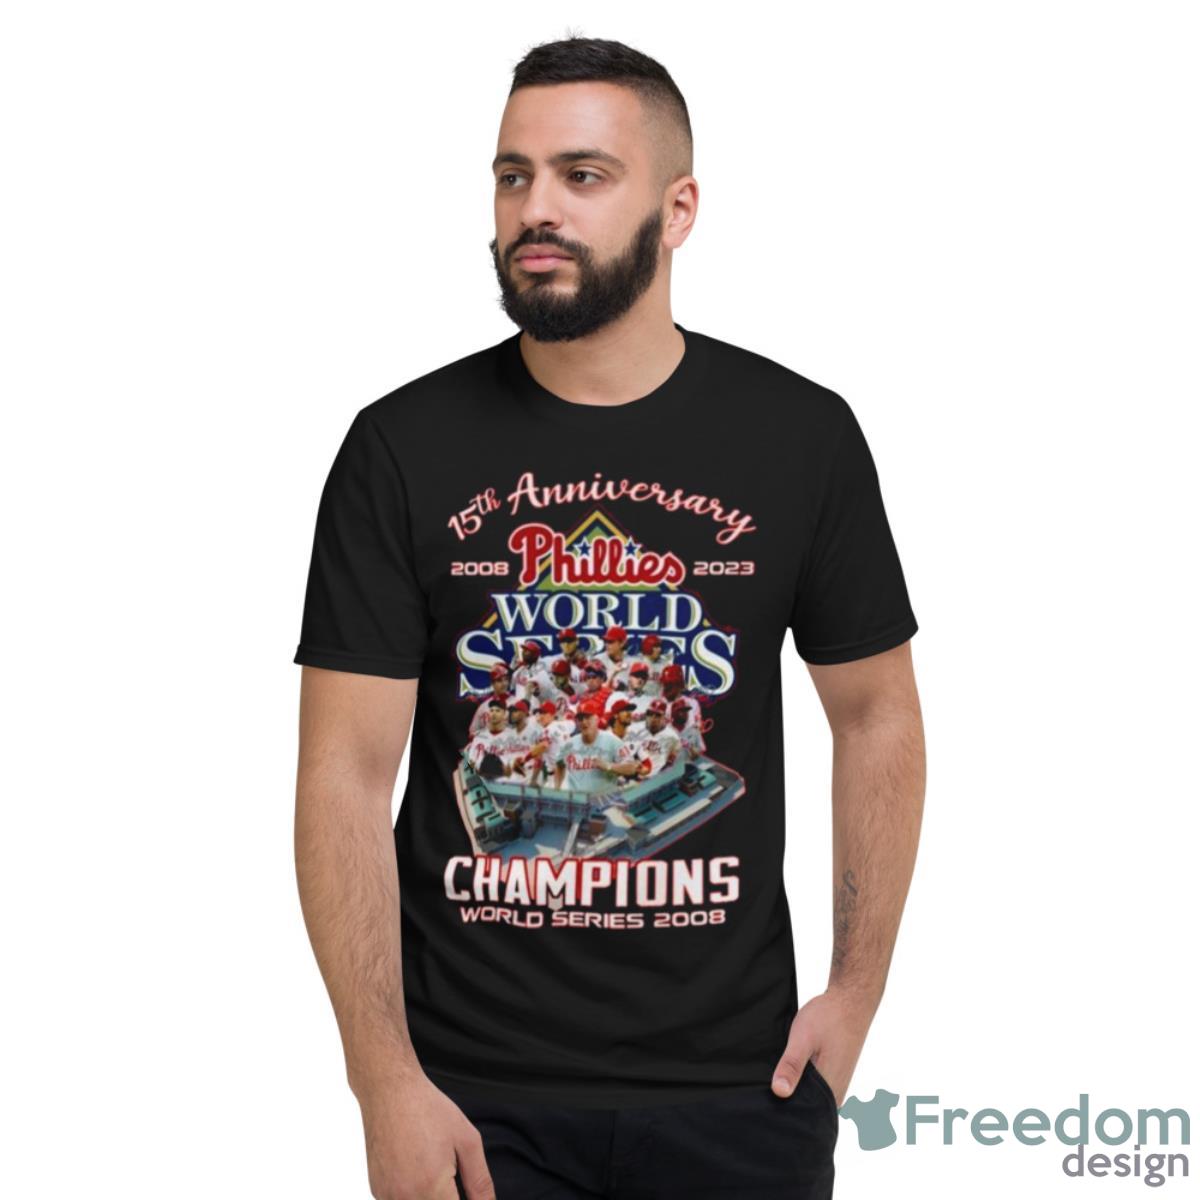 15th Anniversary 2008 – 2023 Phillies Champions World Series 2008 Shirt - Short Sleeve T-Shirt